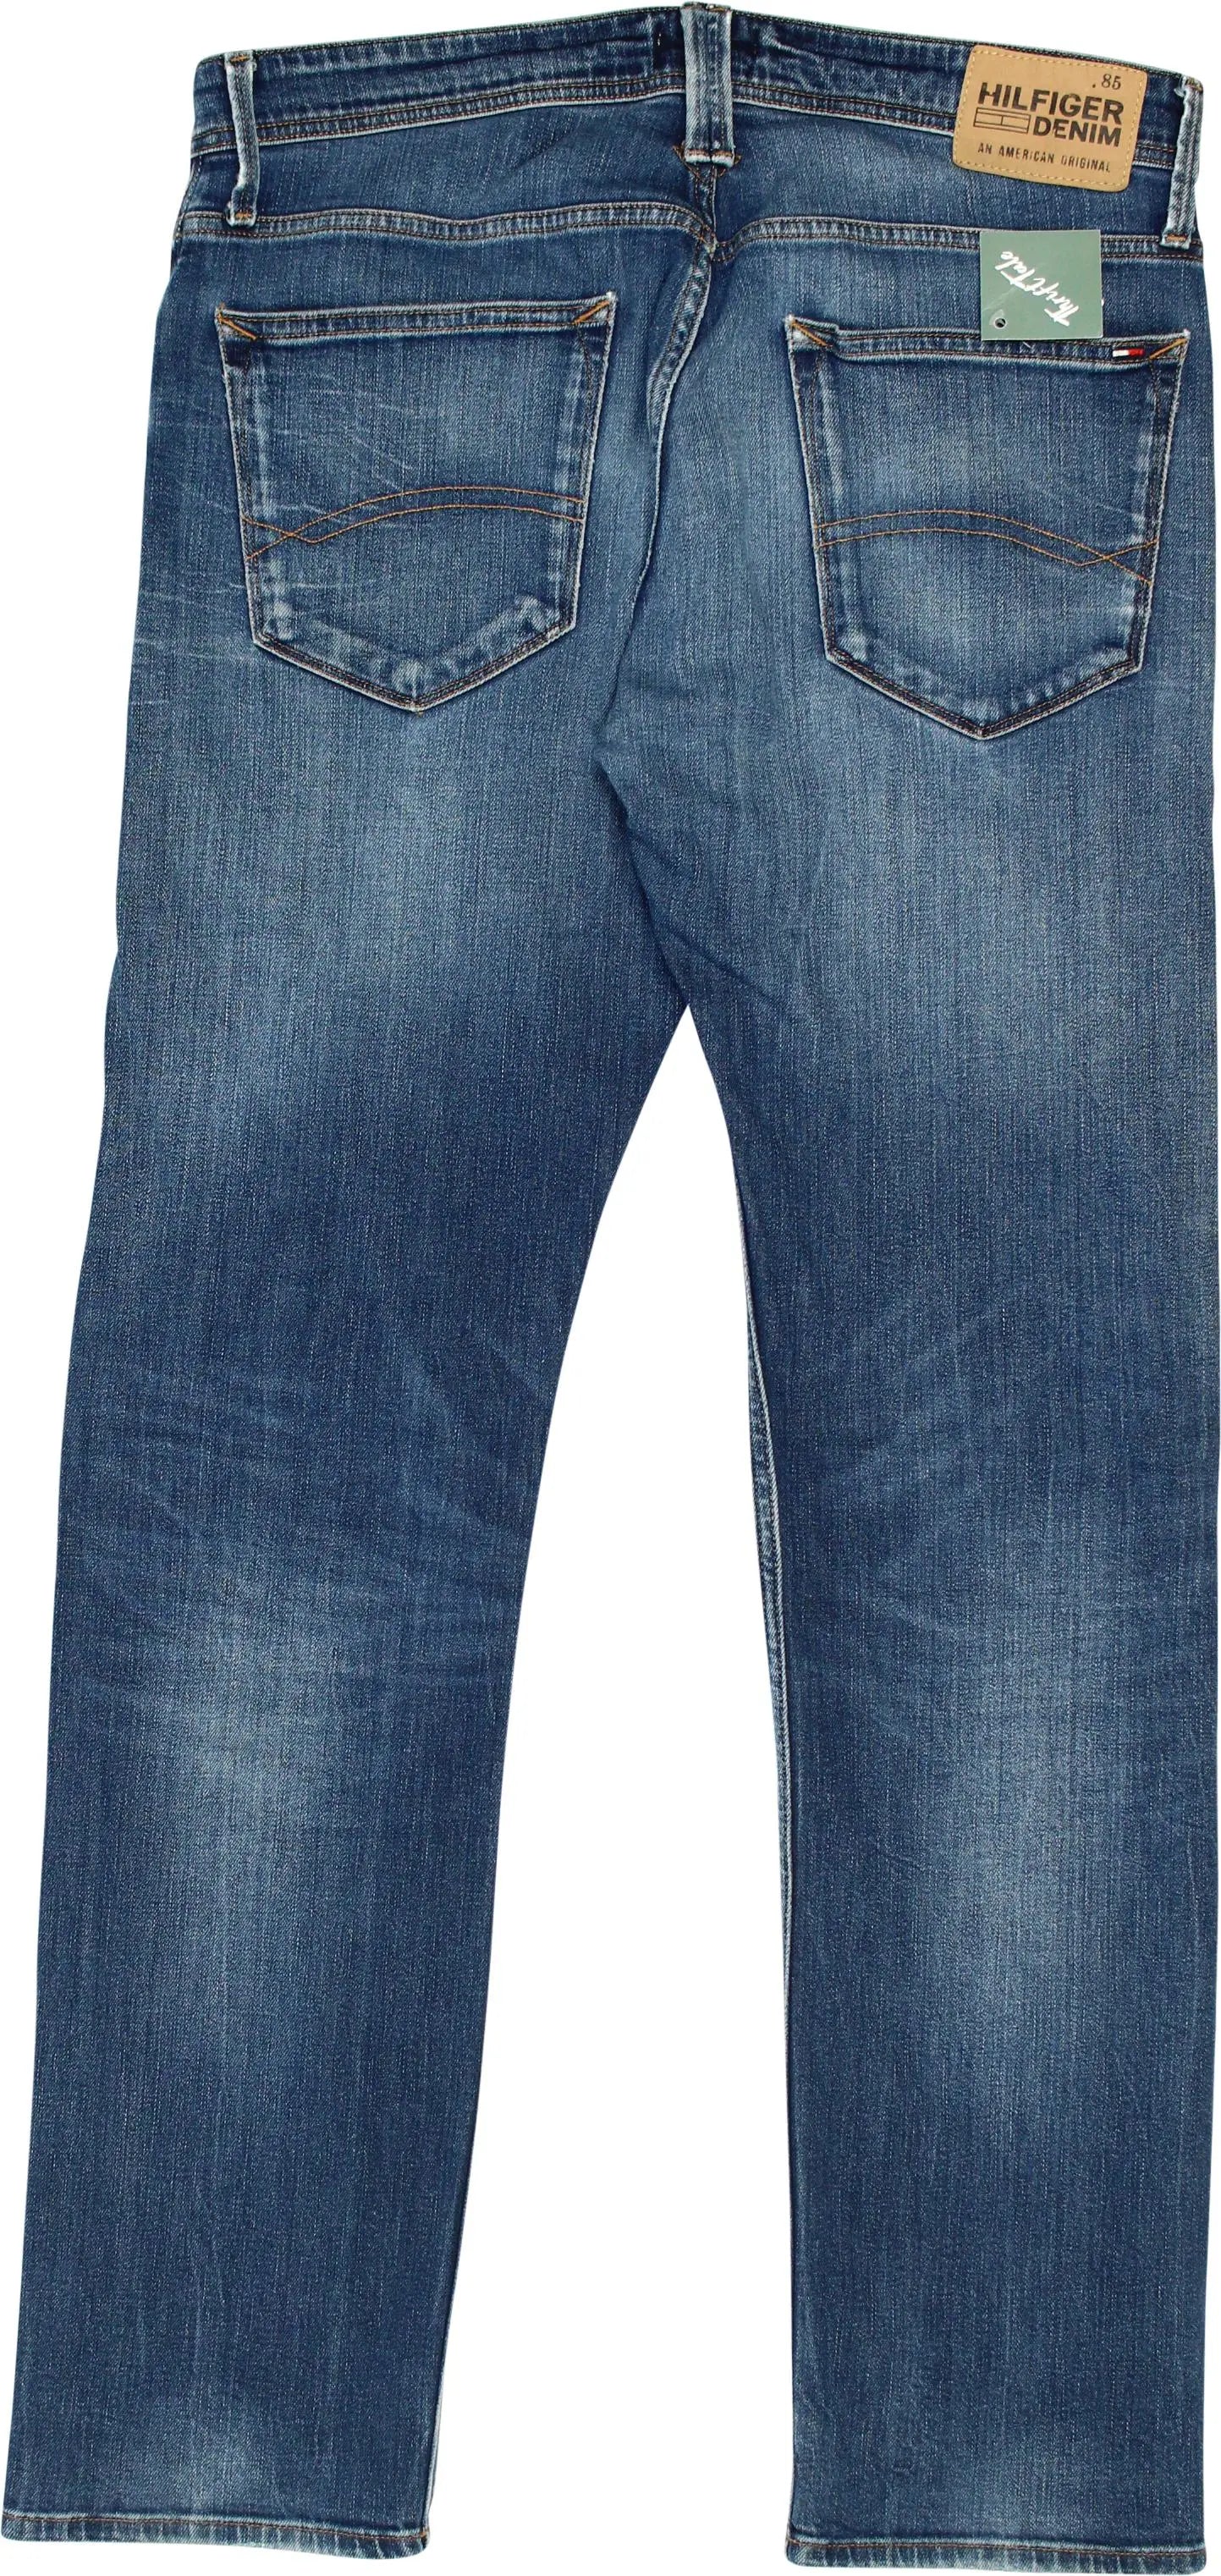 Tommy Hilfiger - Slim Fit Jeans- ThriftTale.com - Vintage and second handclothing